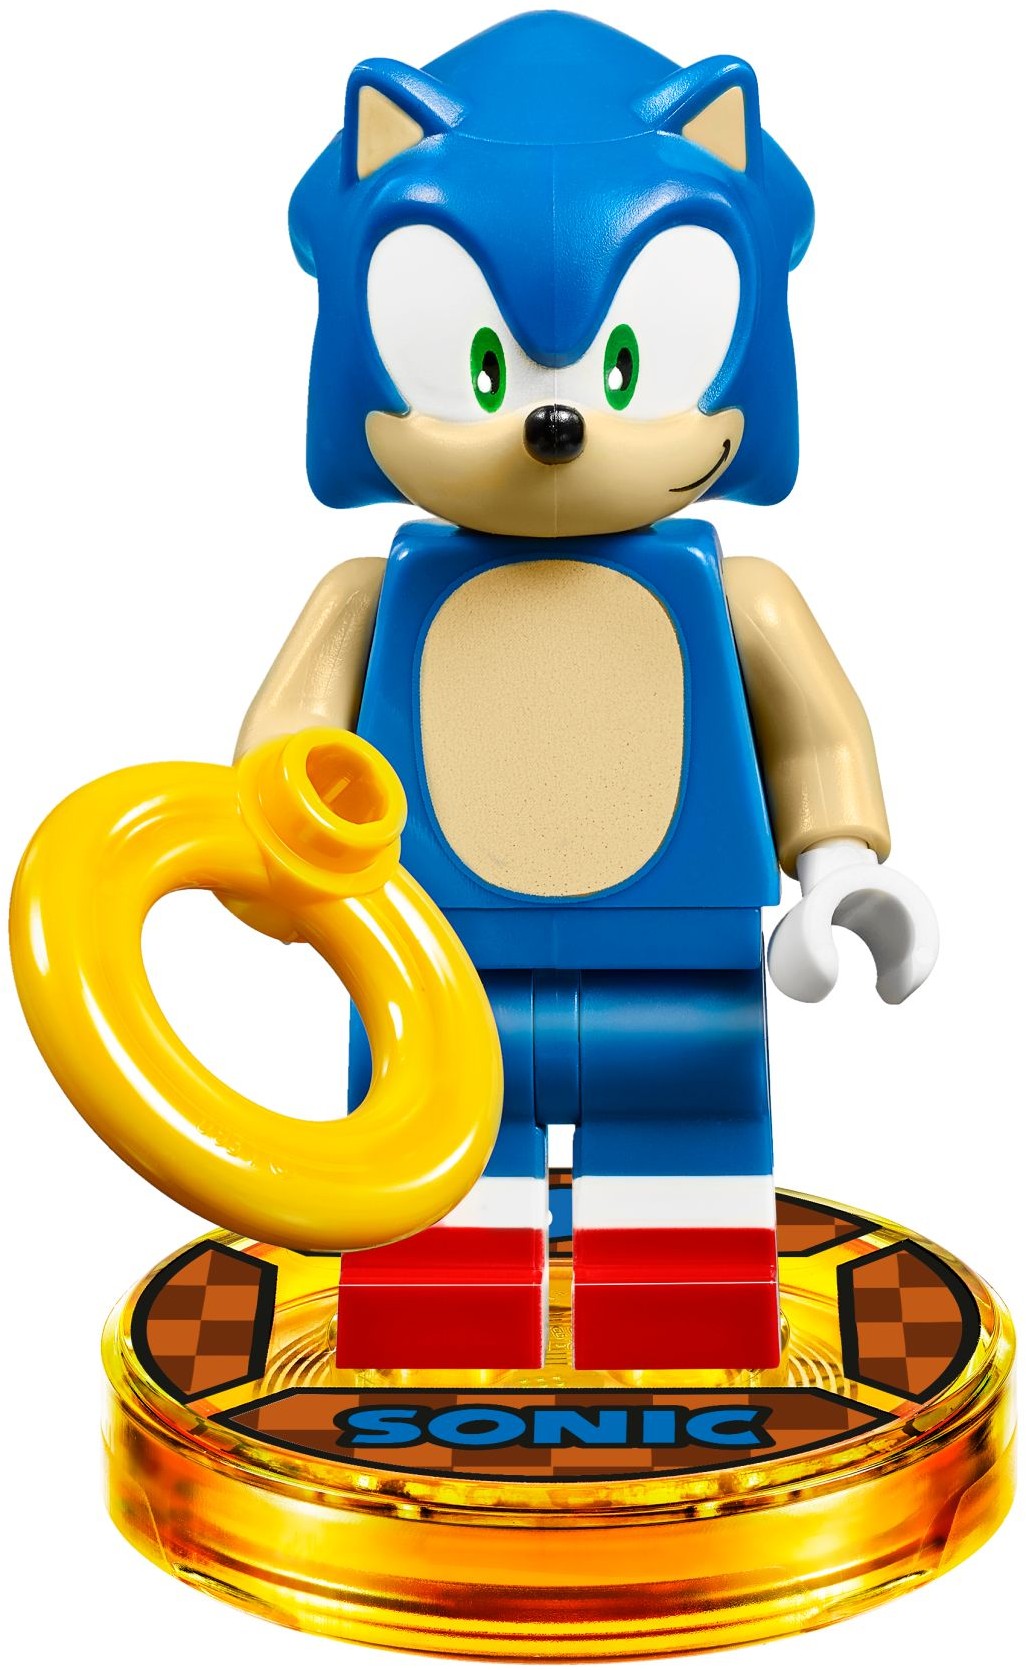 LEGO DIMENSIONS Sonic the Hedgehog Level Pack • Set 71244